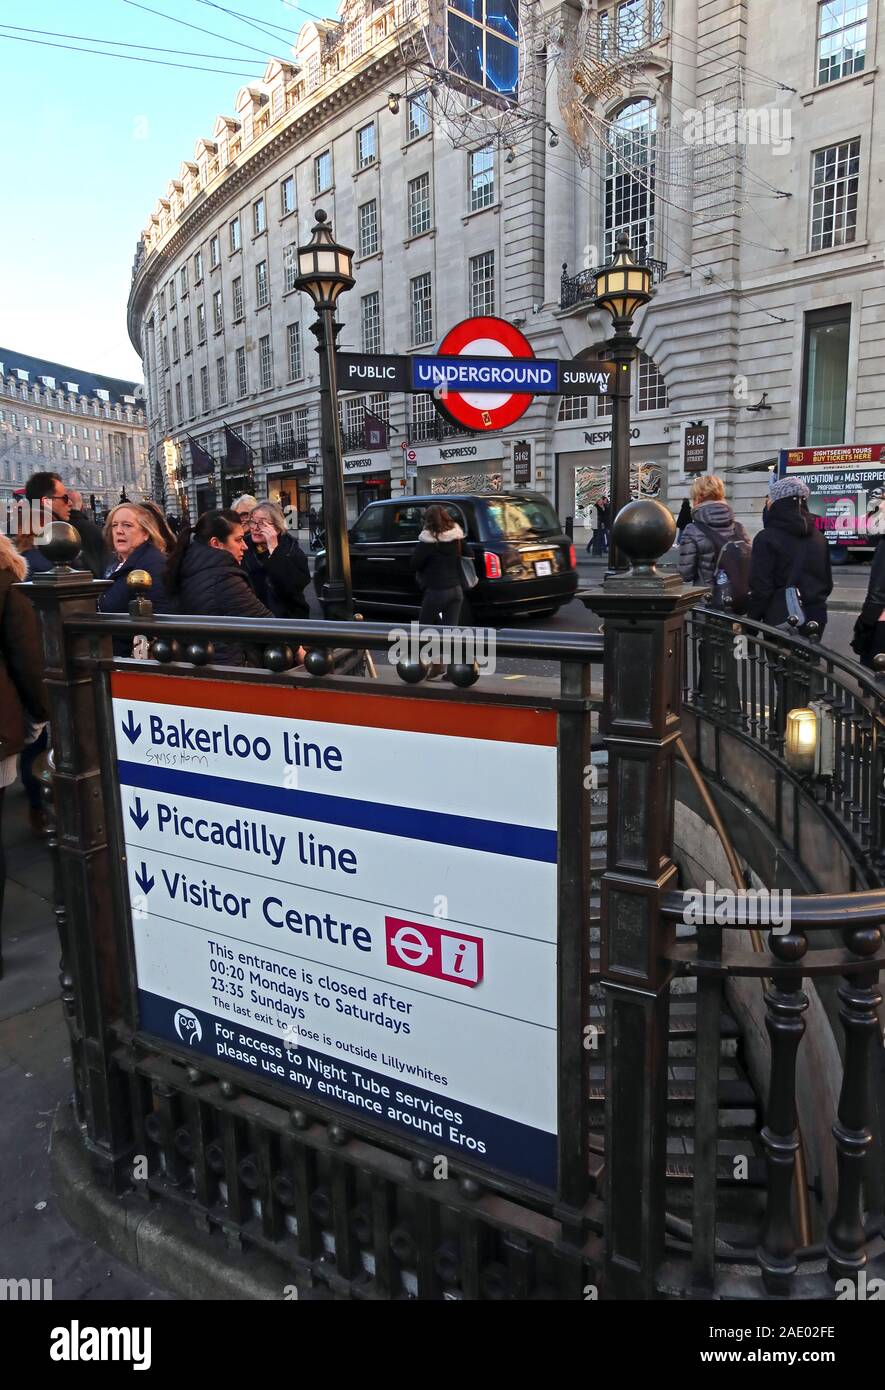 En dehors de la station de métro Piccadilly Circus, Bakerloo Line, Piccadilly Line, Visitor Center, West End, Londres, Angleterre, Royaume-Uni Banque D'Images